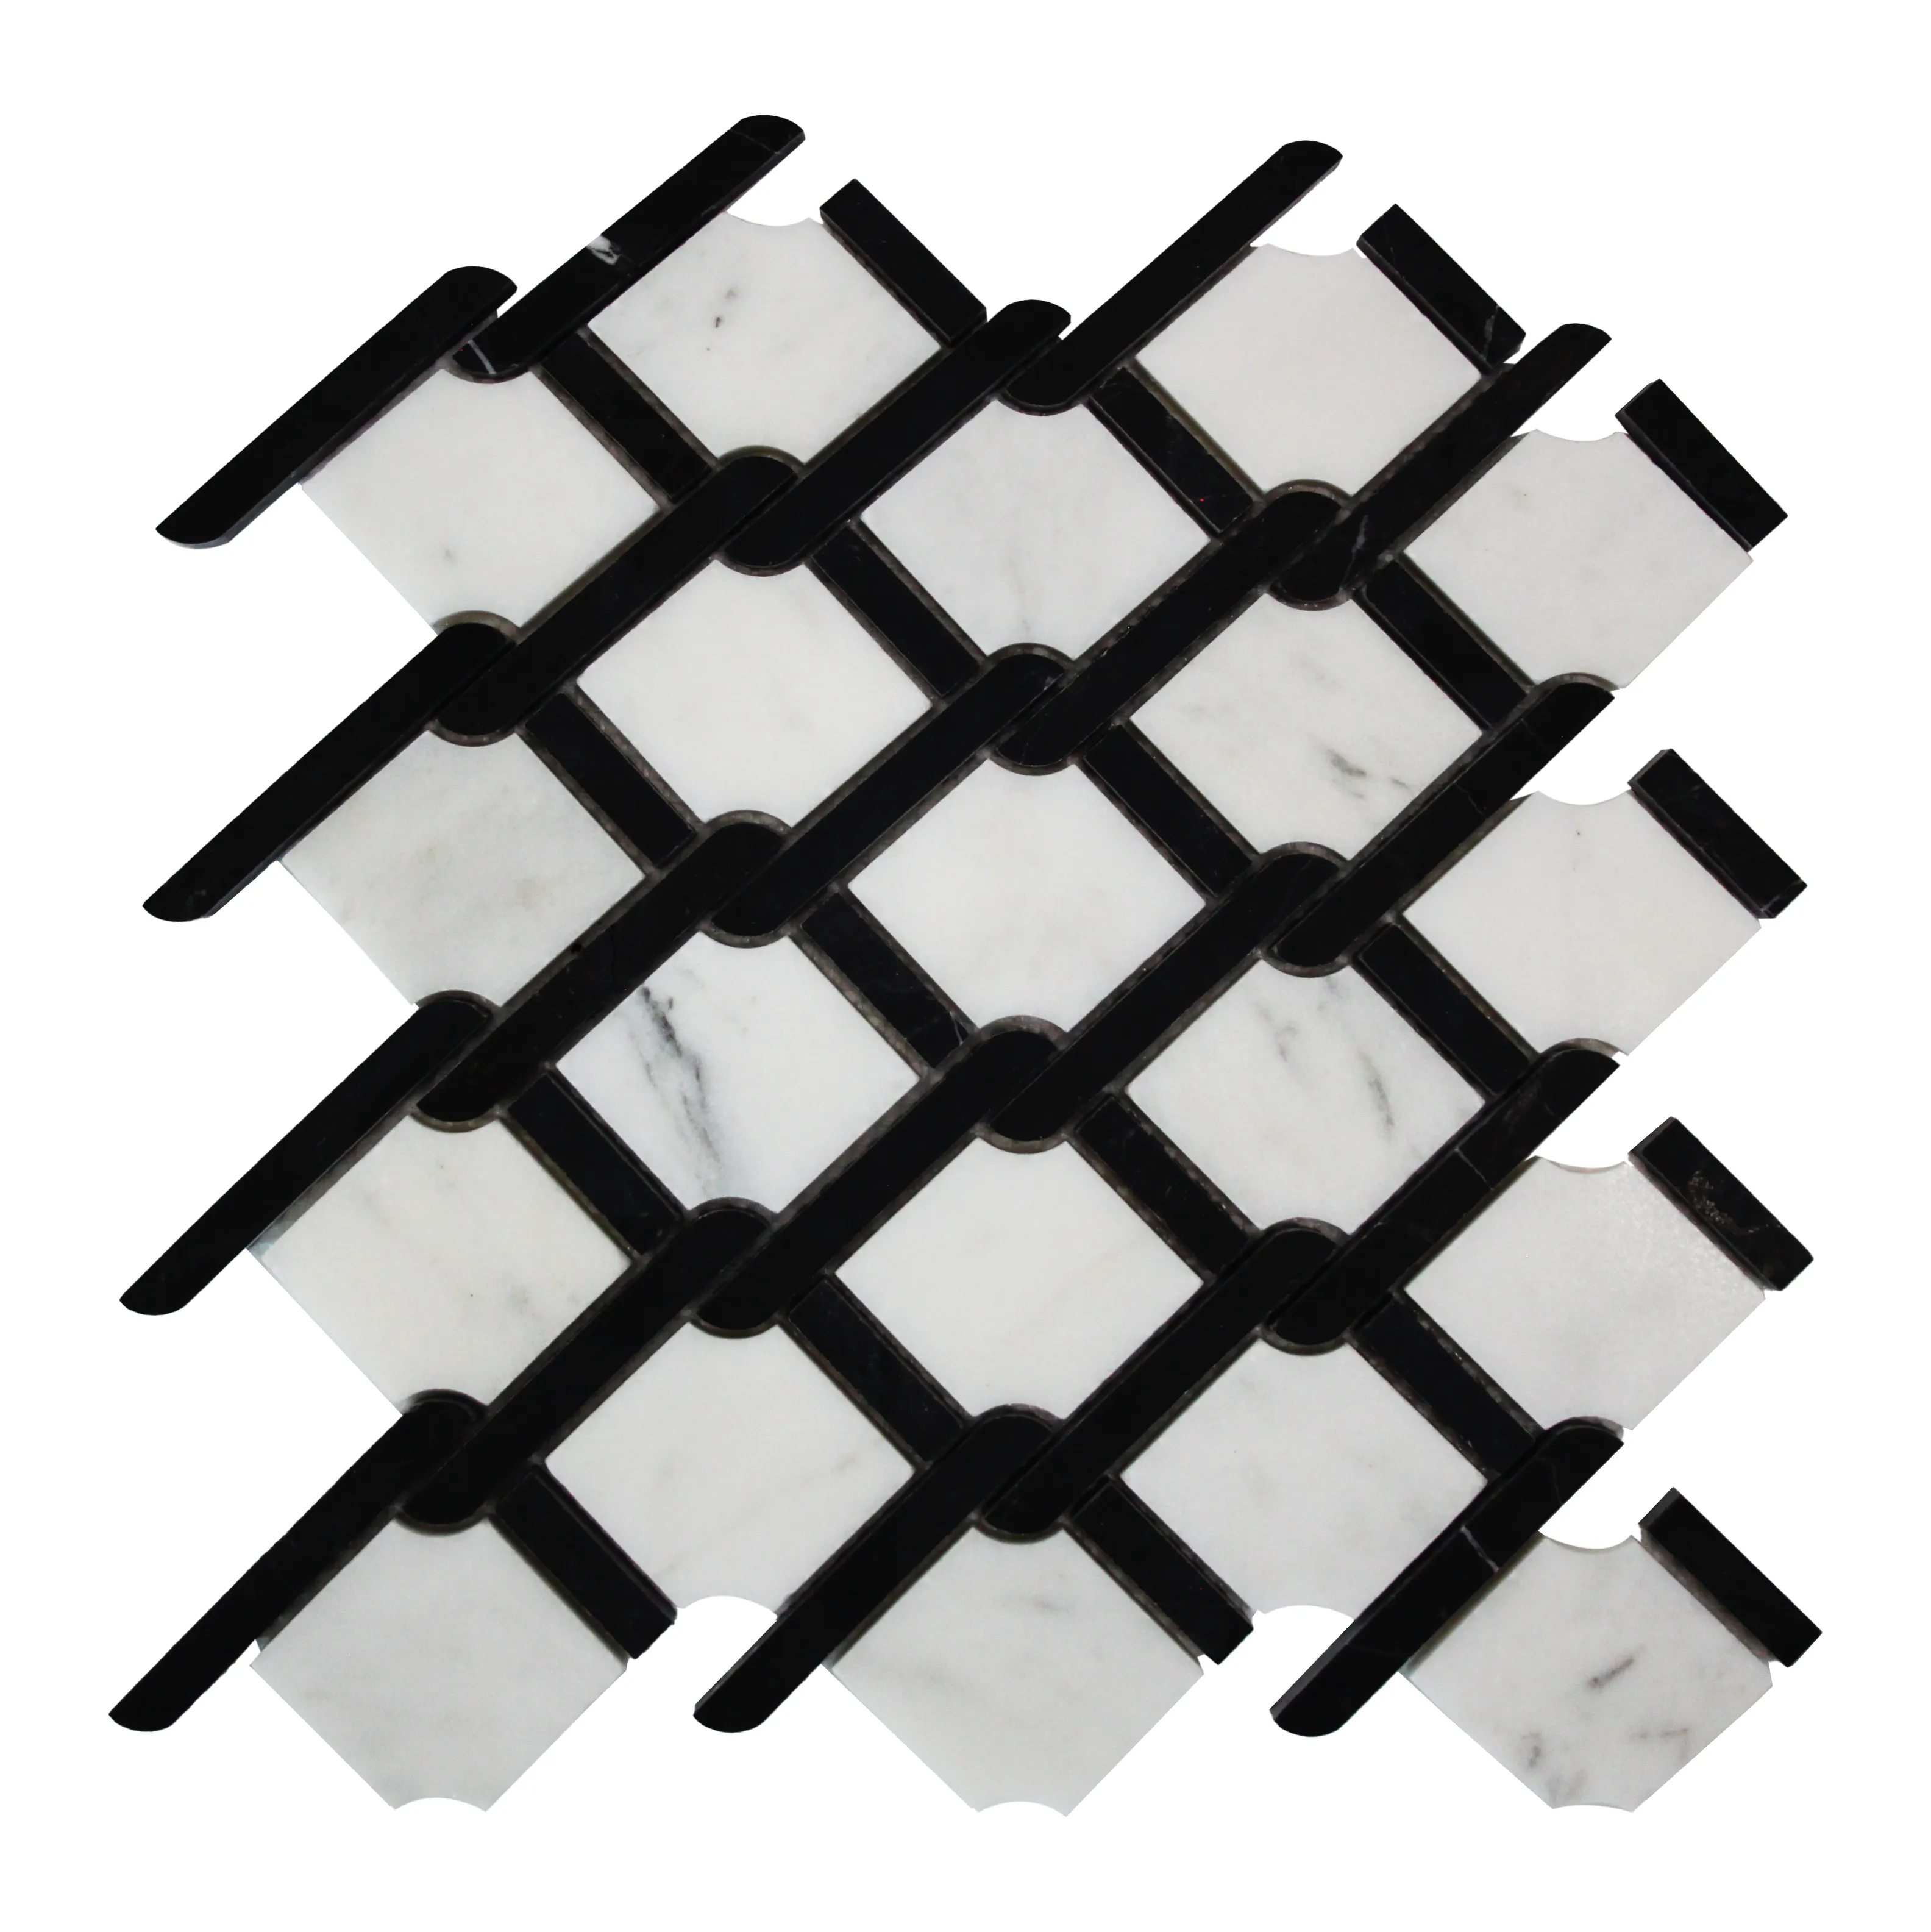 Carrara White Italian Marble Marbella Lynx Rope Design with Nero Marquina Black Strips Mosaic Tile Polished